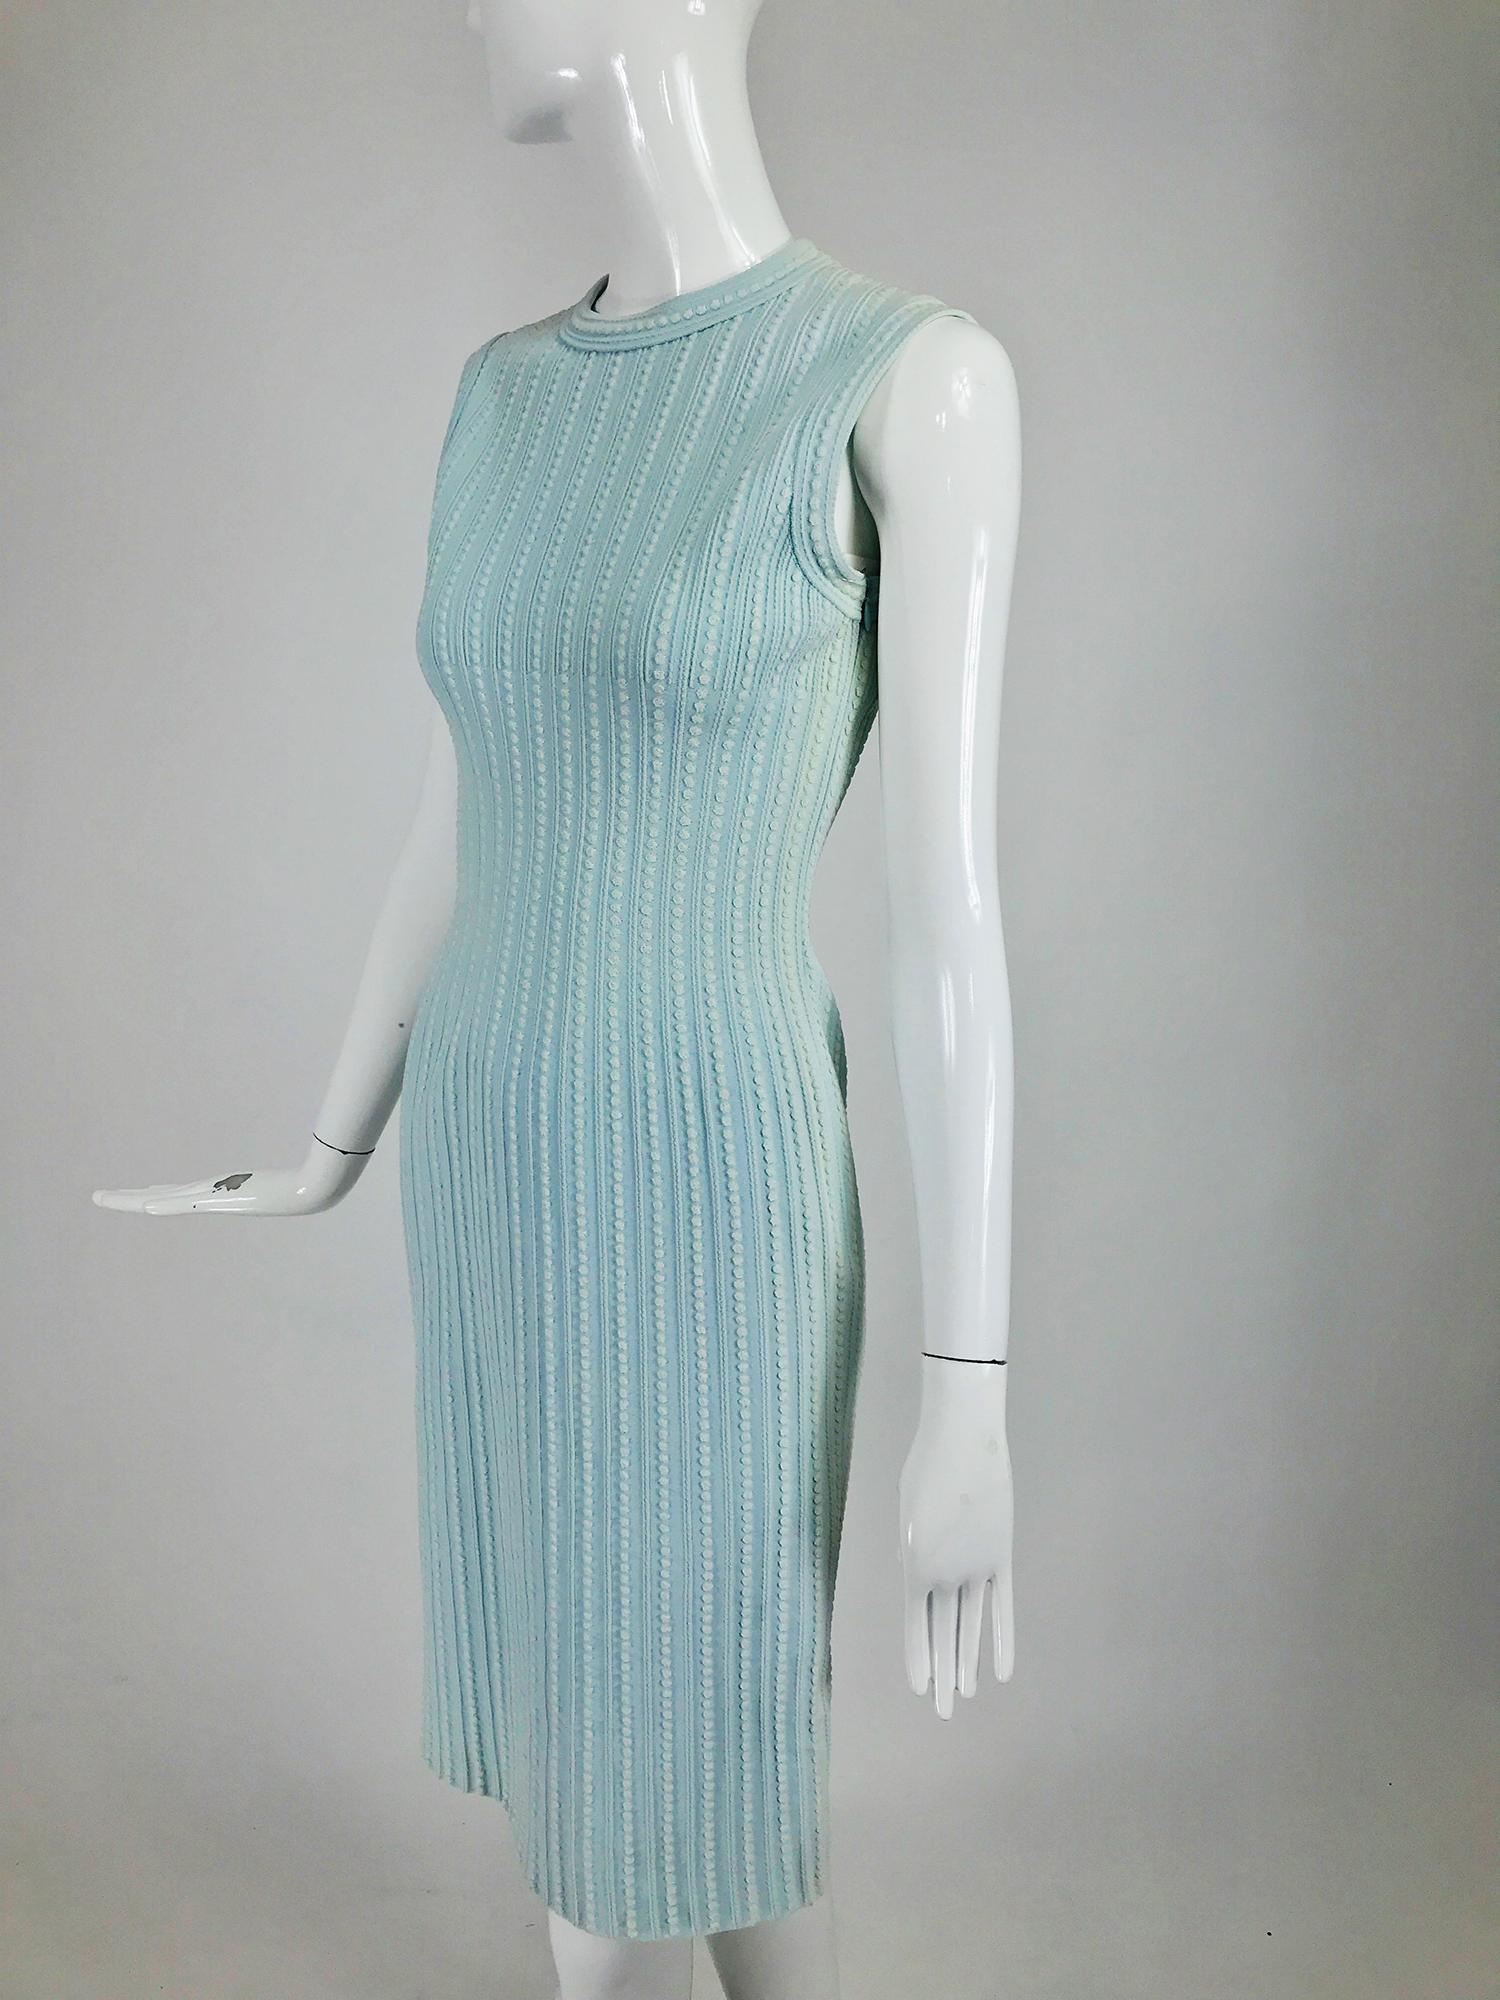  Azzedine Alaïa Blue and Cream Fitted Body Con Dress 3